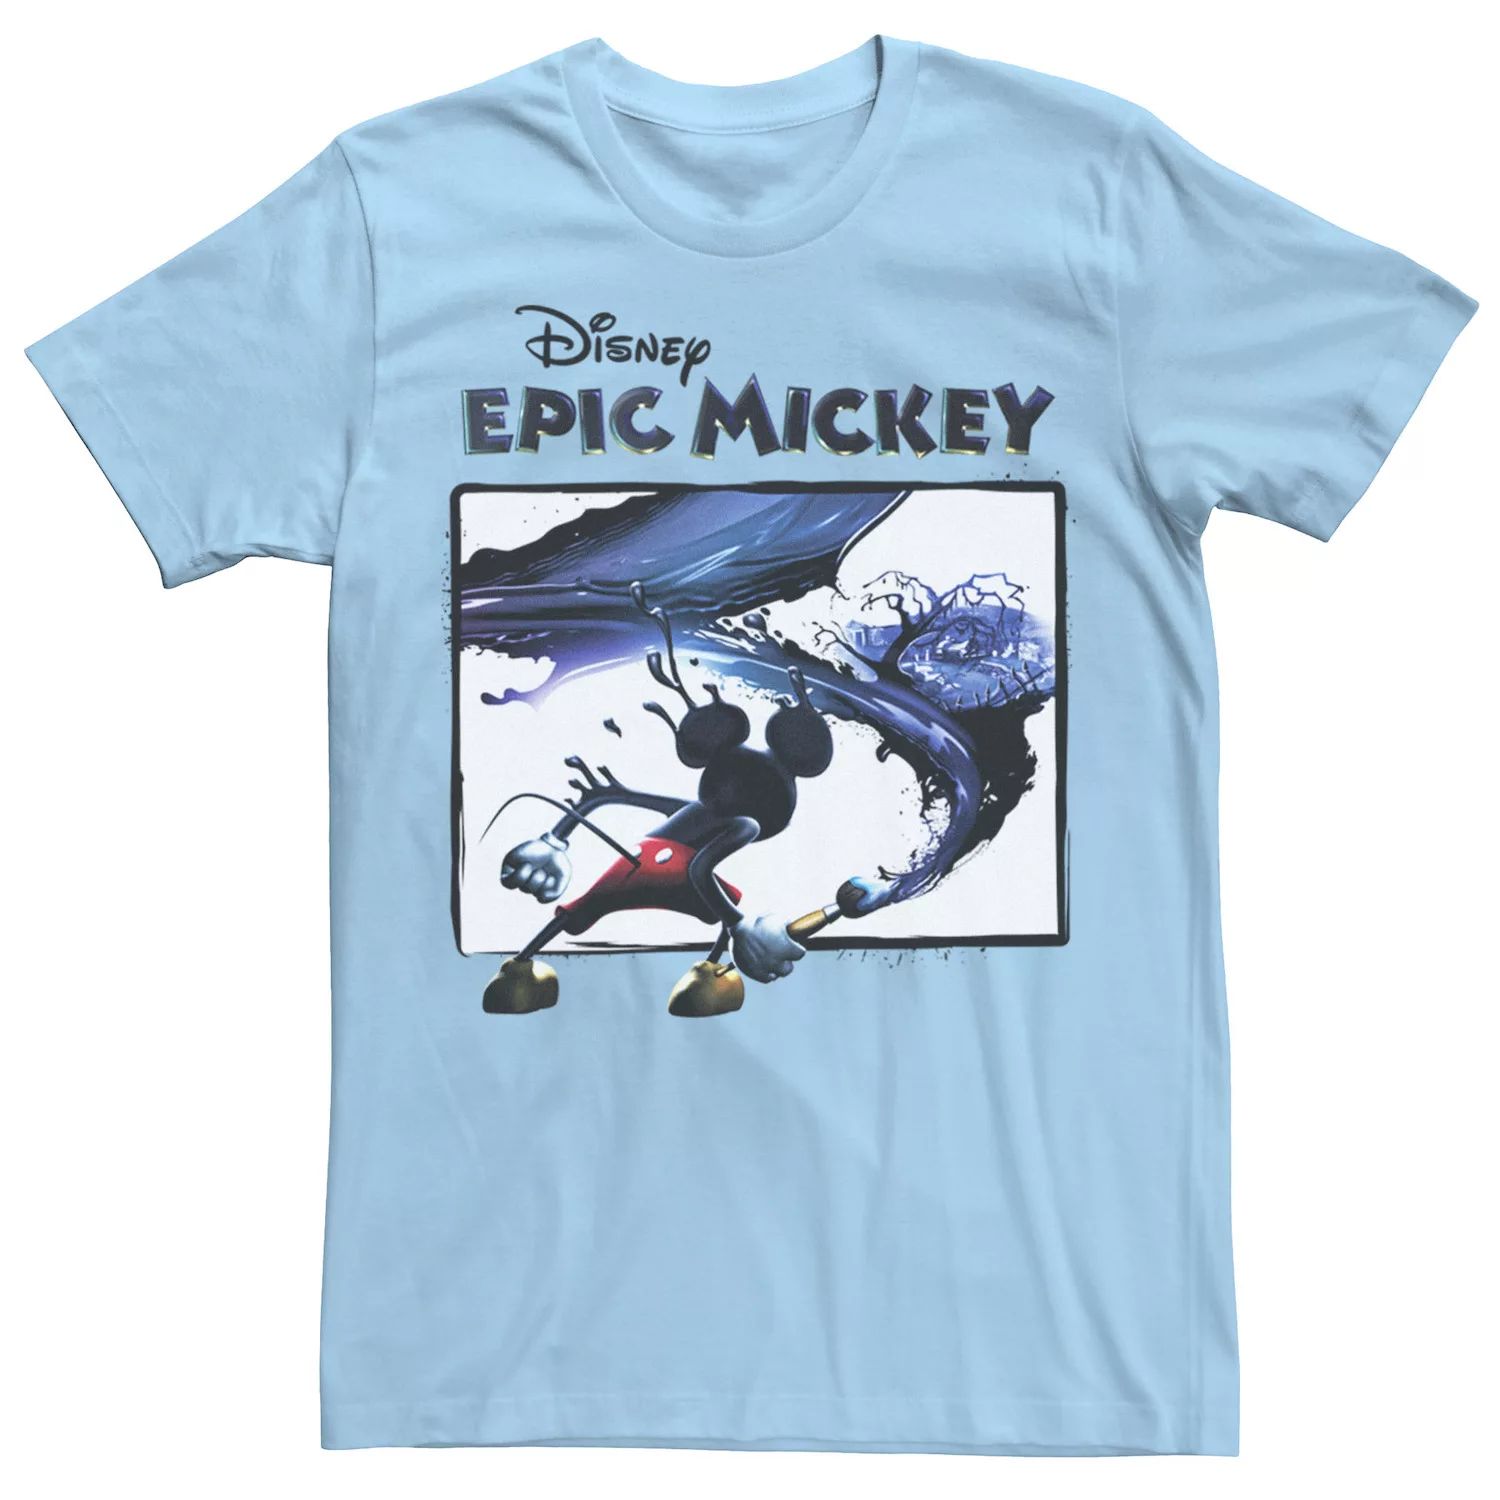 Мужская футболка с портретом Disney Epic Mickey Painting Licensed Character мужская футболка с портретом disney epic mickey painting licensed character